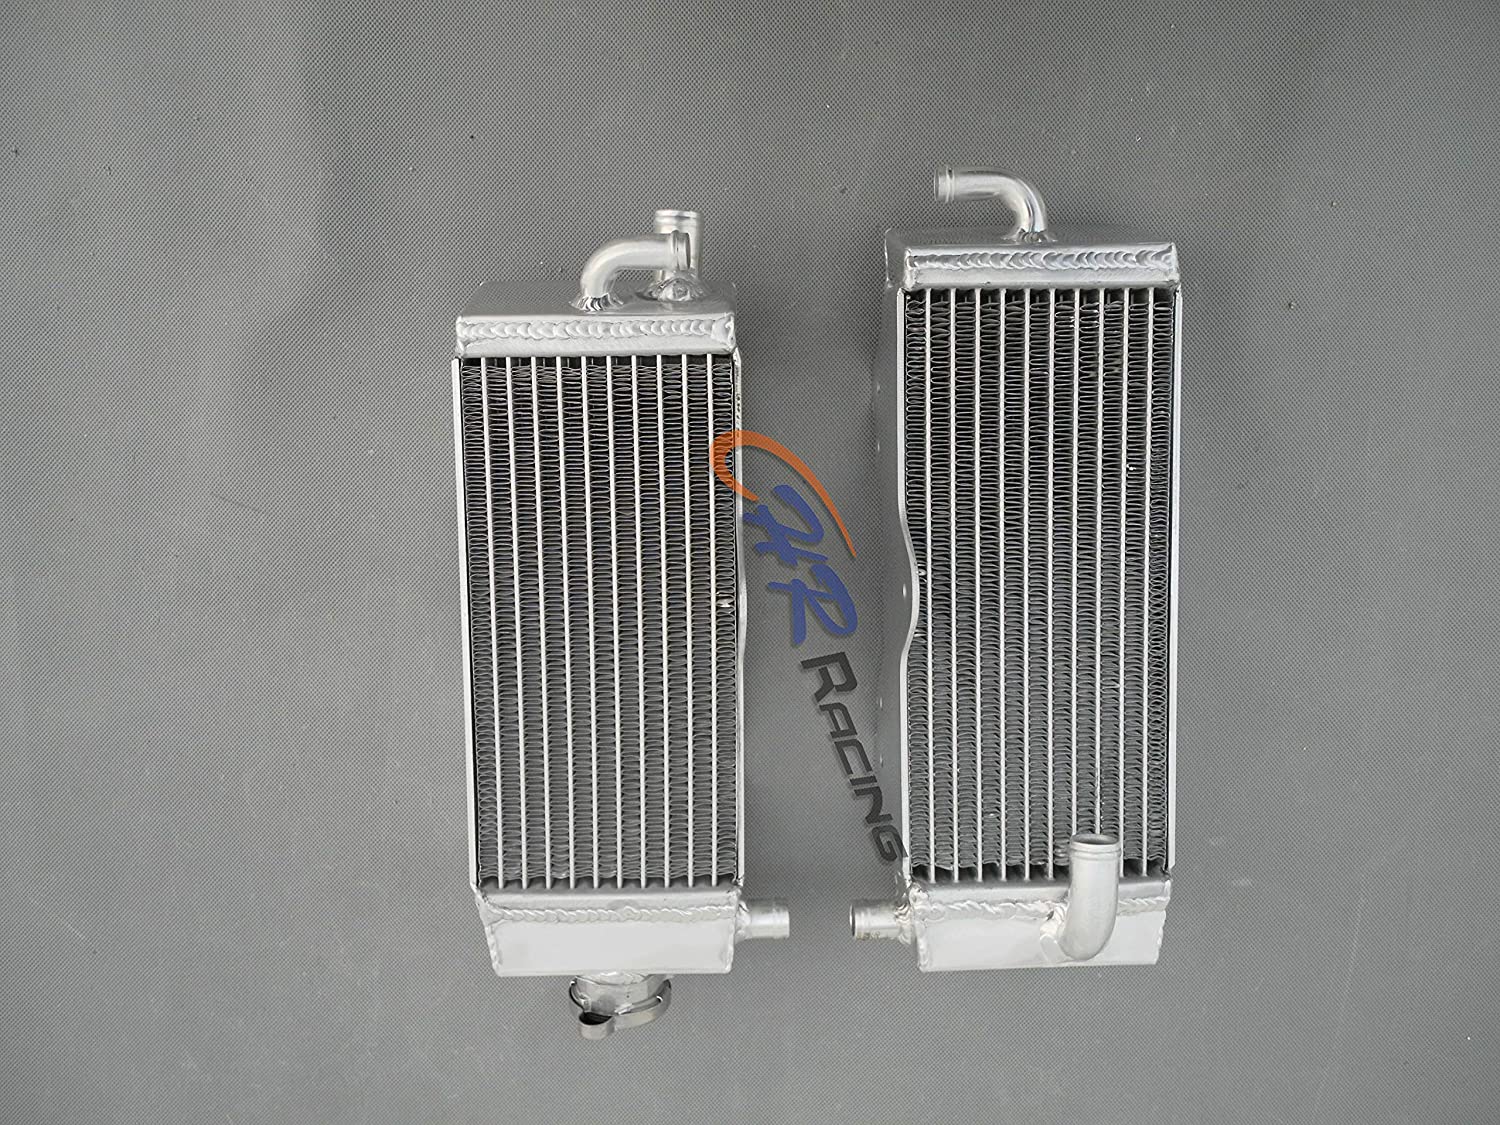 L&R aluminum radiator FOR Yamaha YZ125 YZ 125 1996-2001 97 98